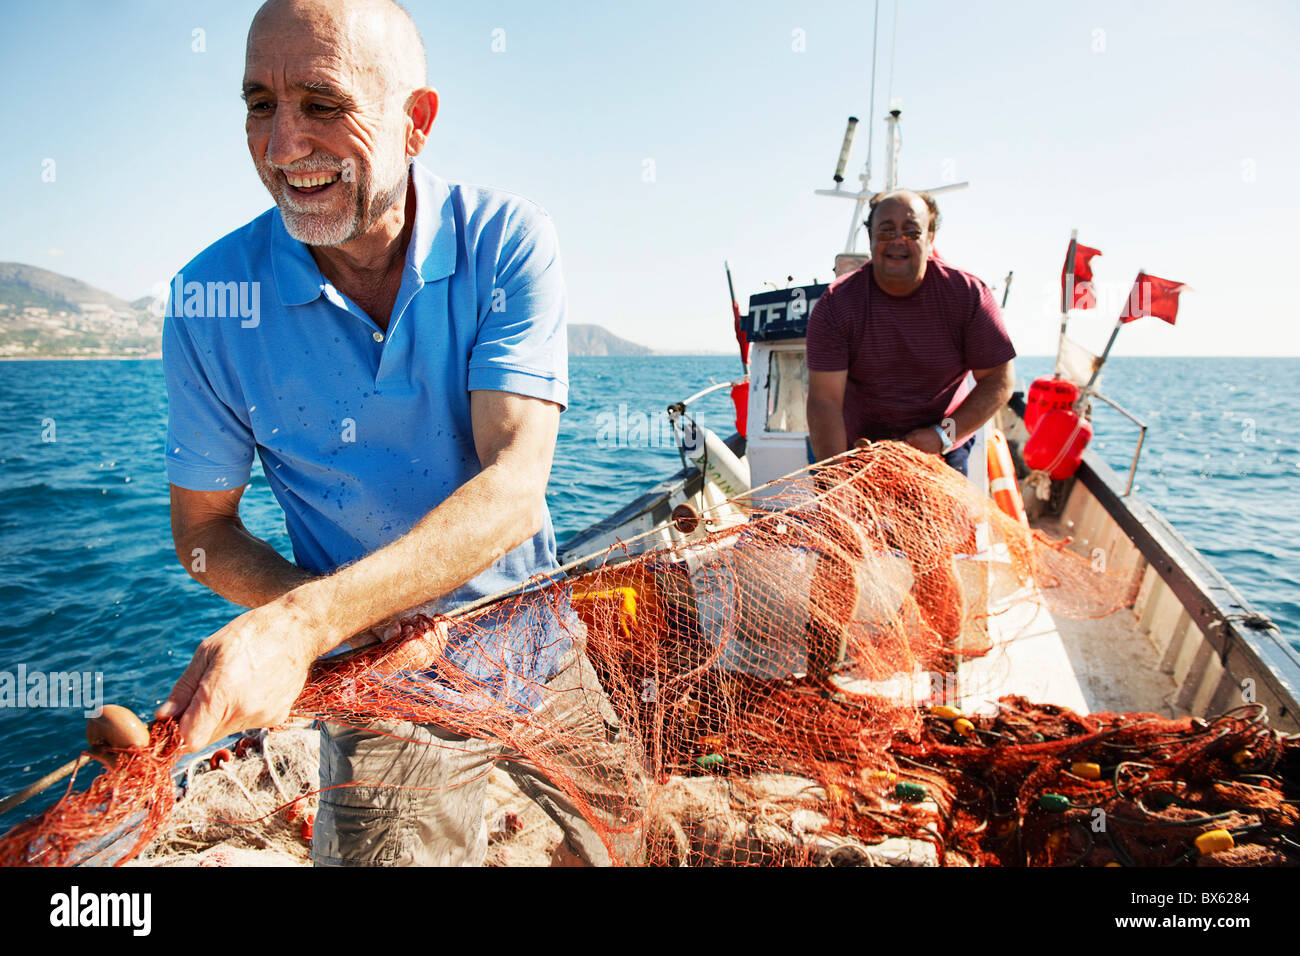 Fisherman pulling in nets Stock Photo